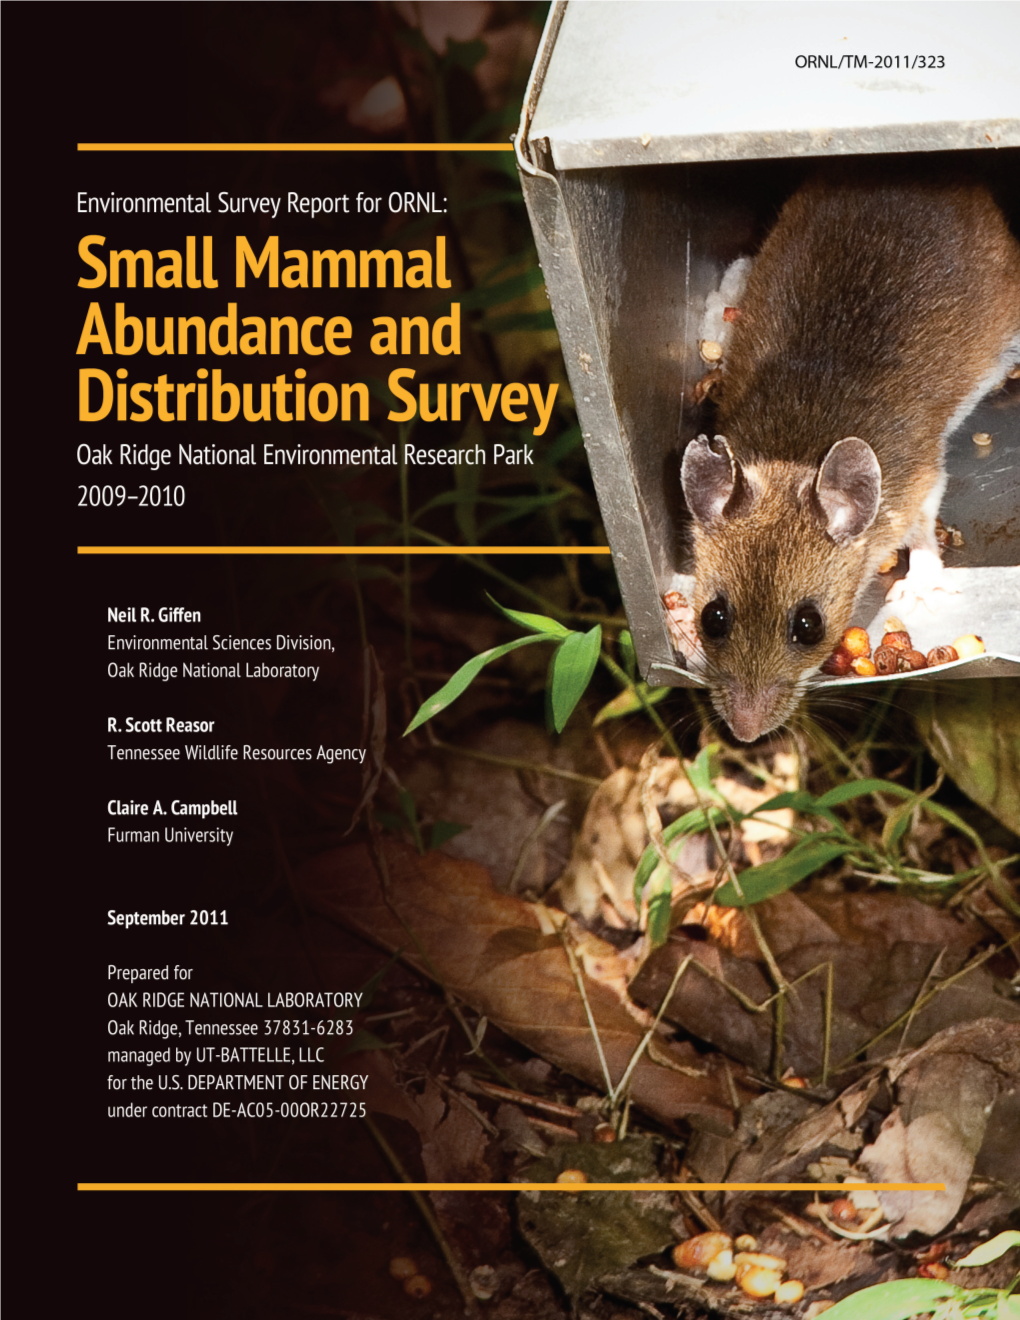 Small Mammal Abundance and Distribution Survey: Oak Ridge National Environmental Research Park